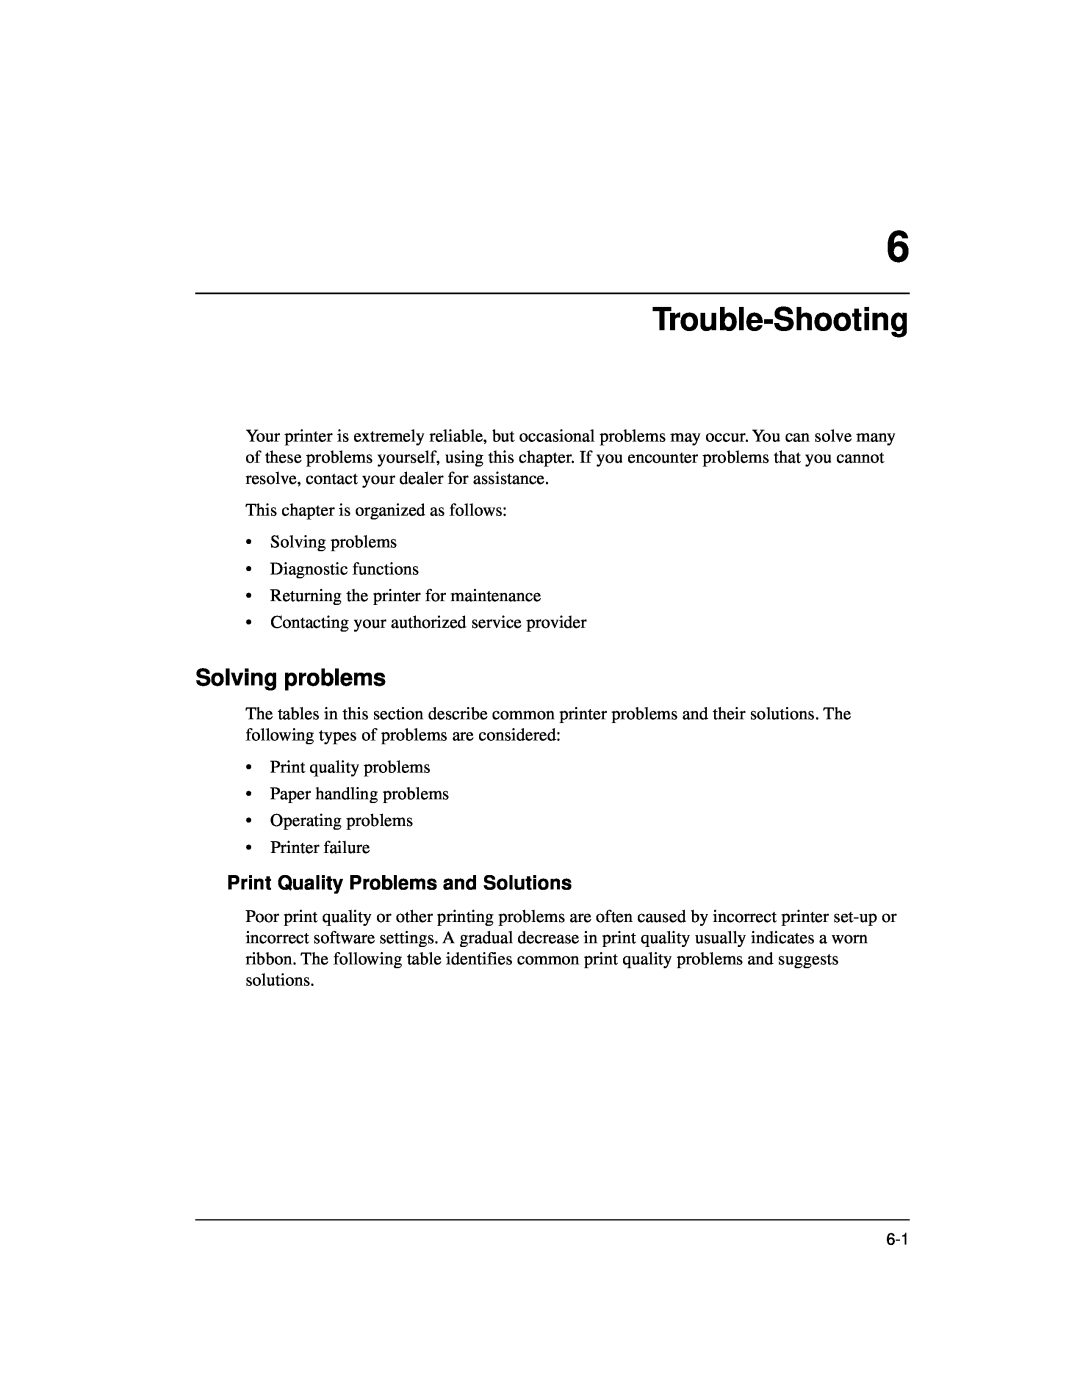 Genicom LA36 manual Trouble-Shooting, Solving problems 